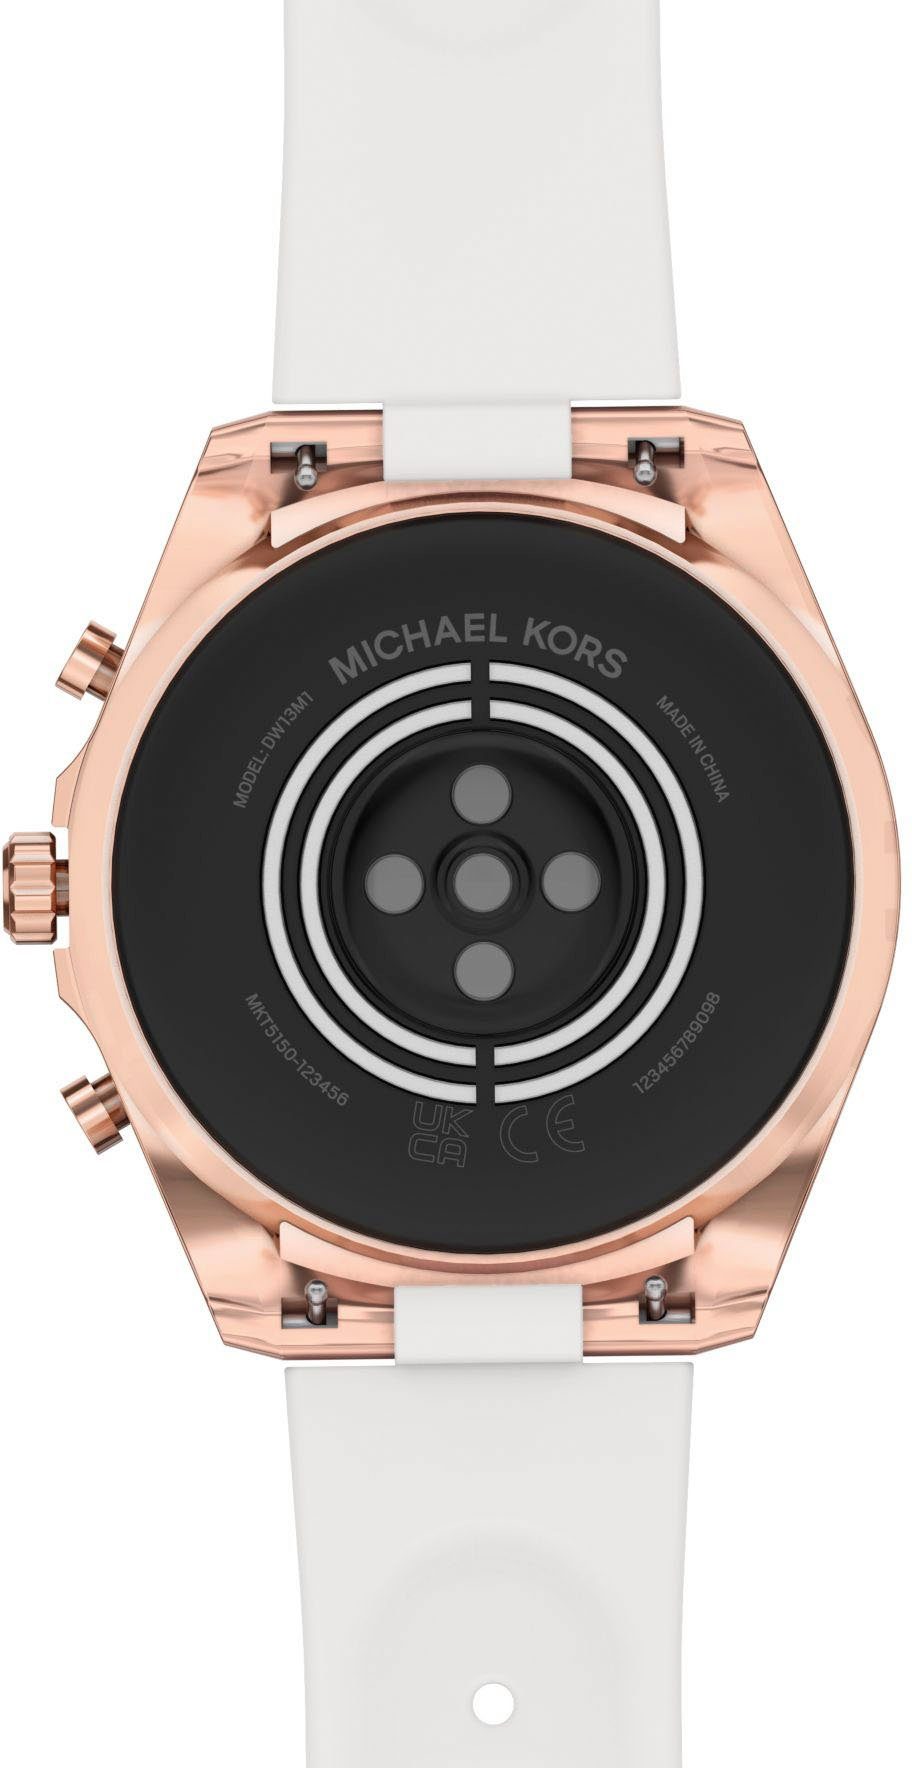 MICHAEL KORS by Google) MKT5153 OS ACCESS GEN (Wear BRADSHAW, 6 Smartwatch